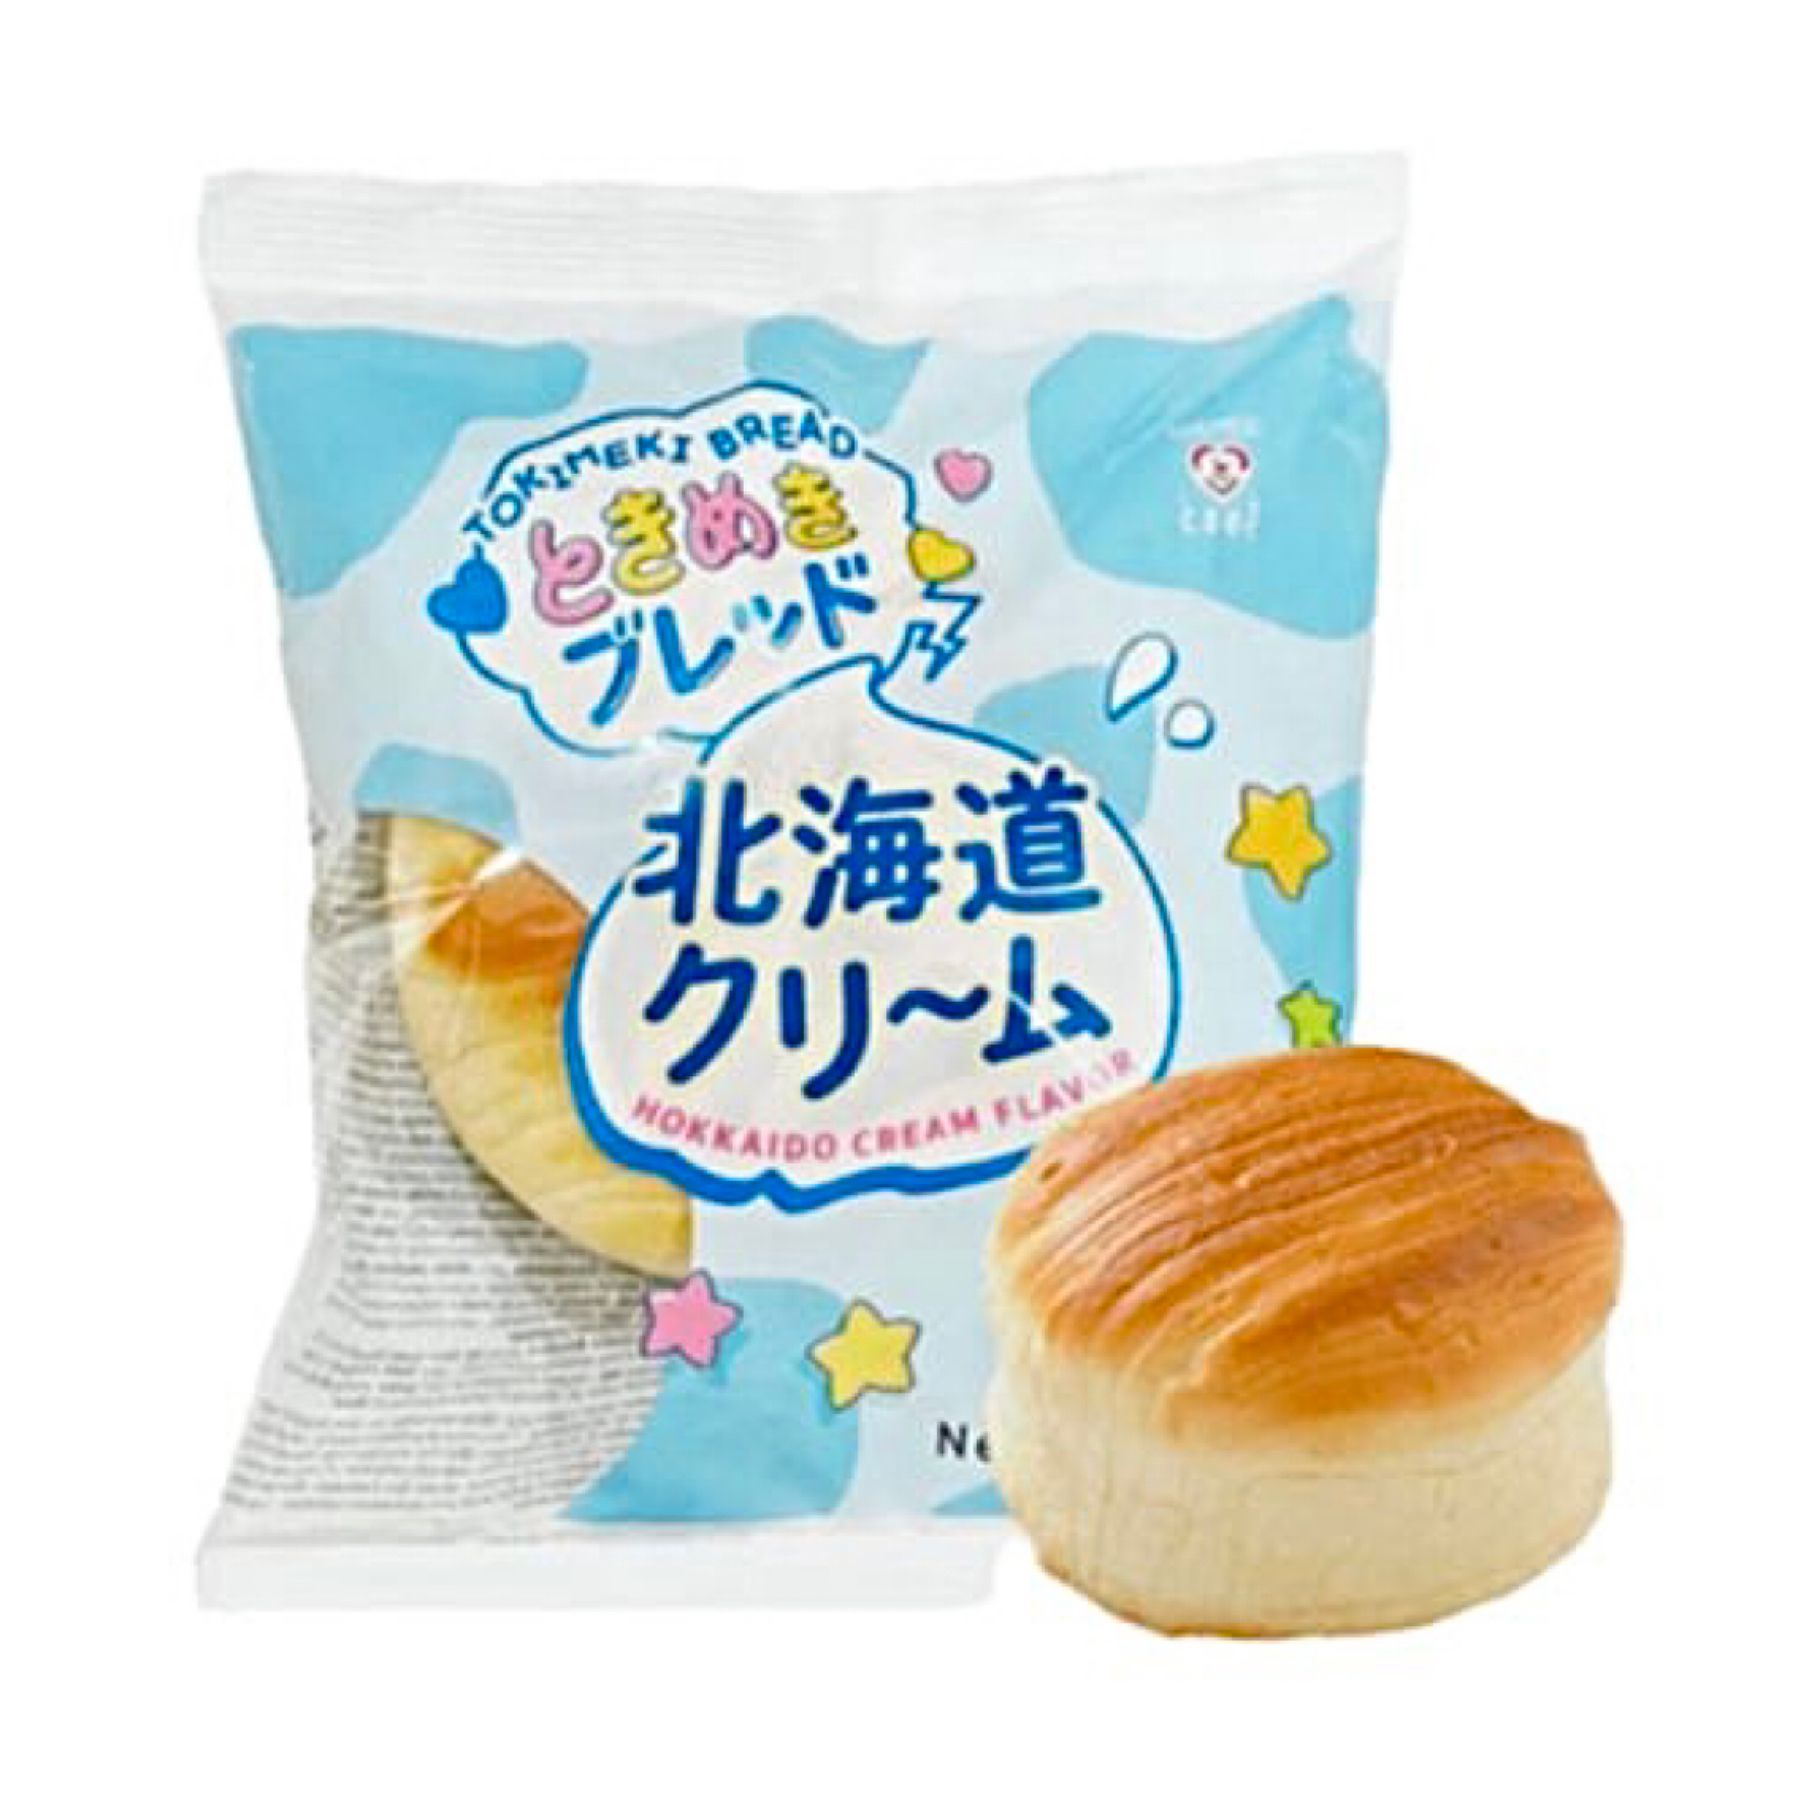 Tokimeki Bread Hokkaido Cream 70g